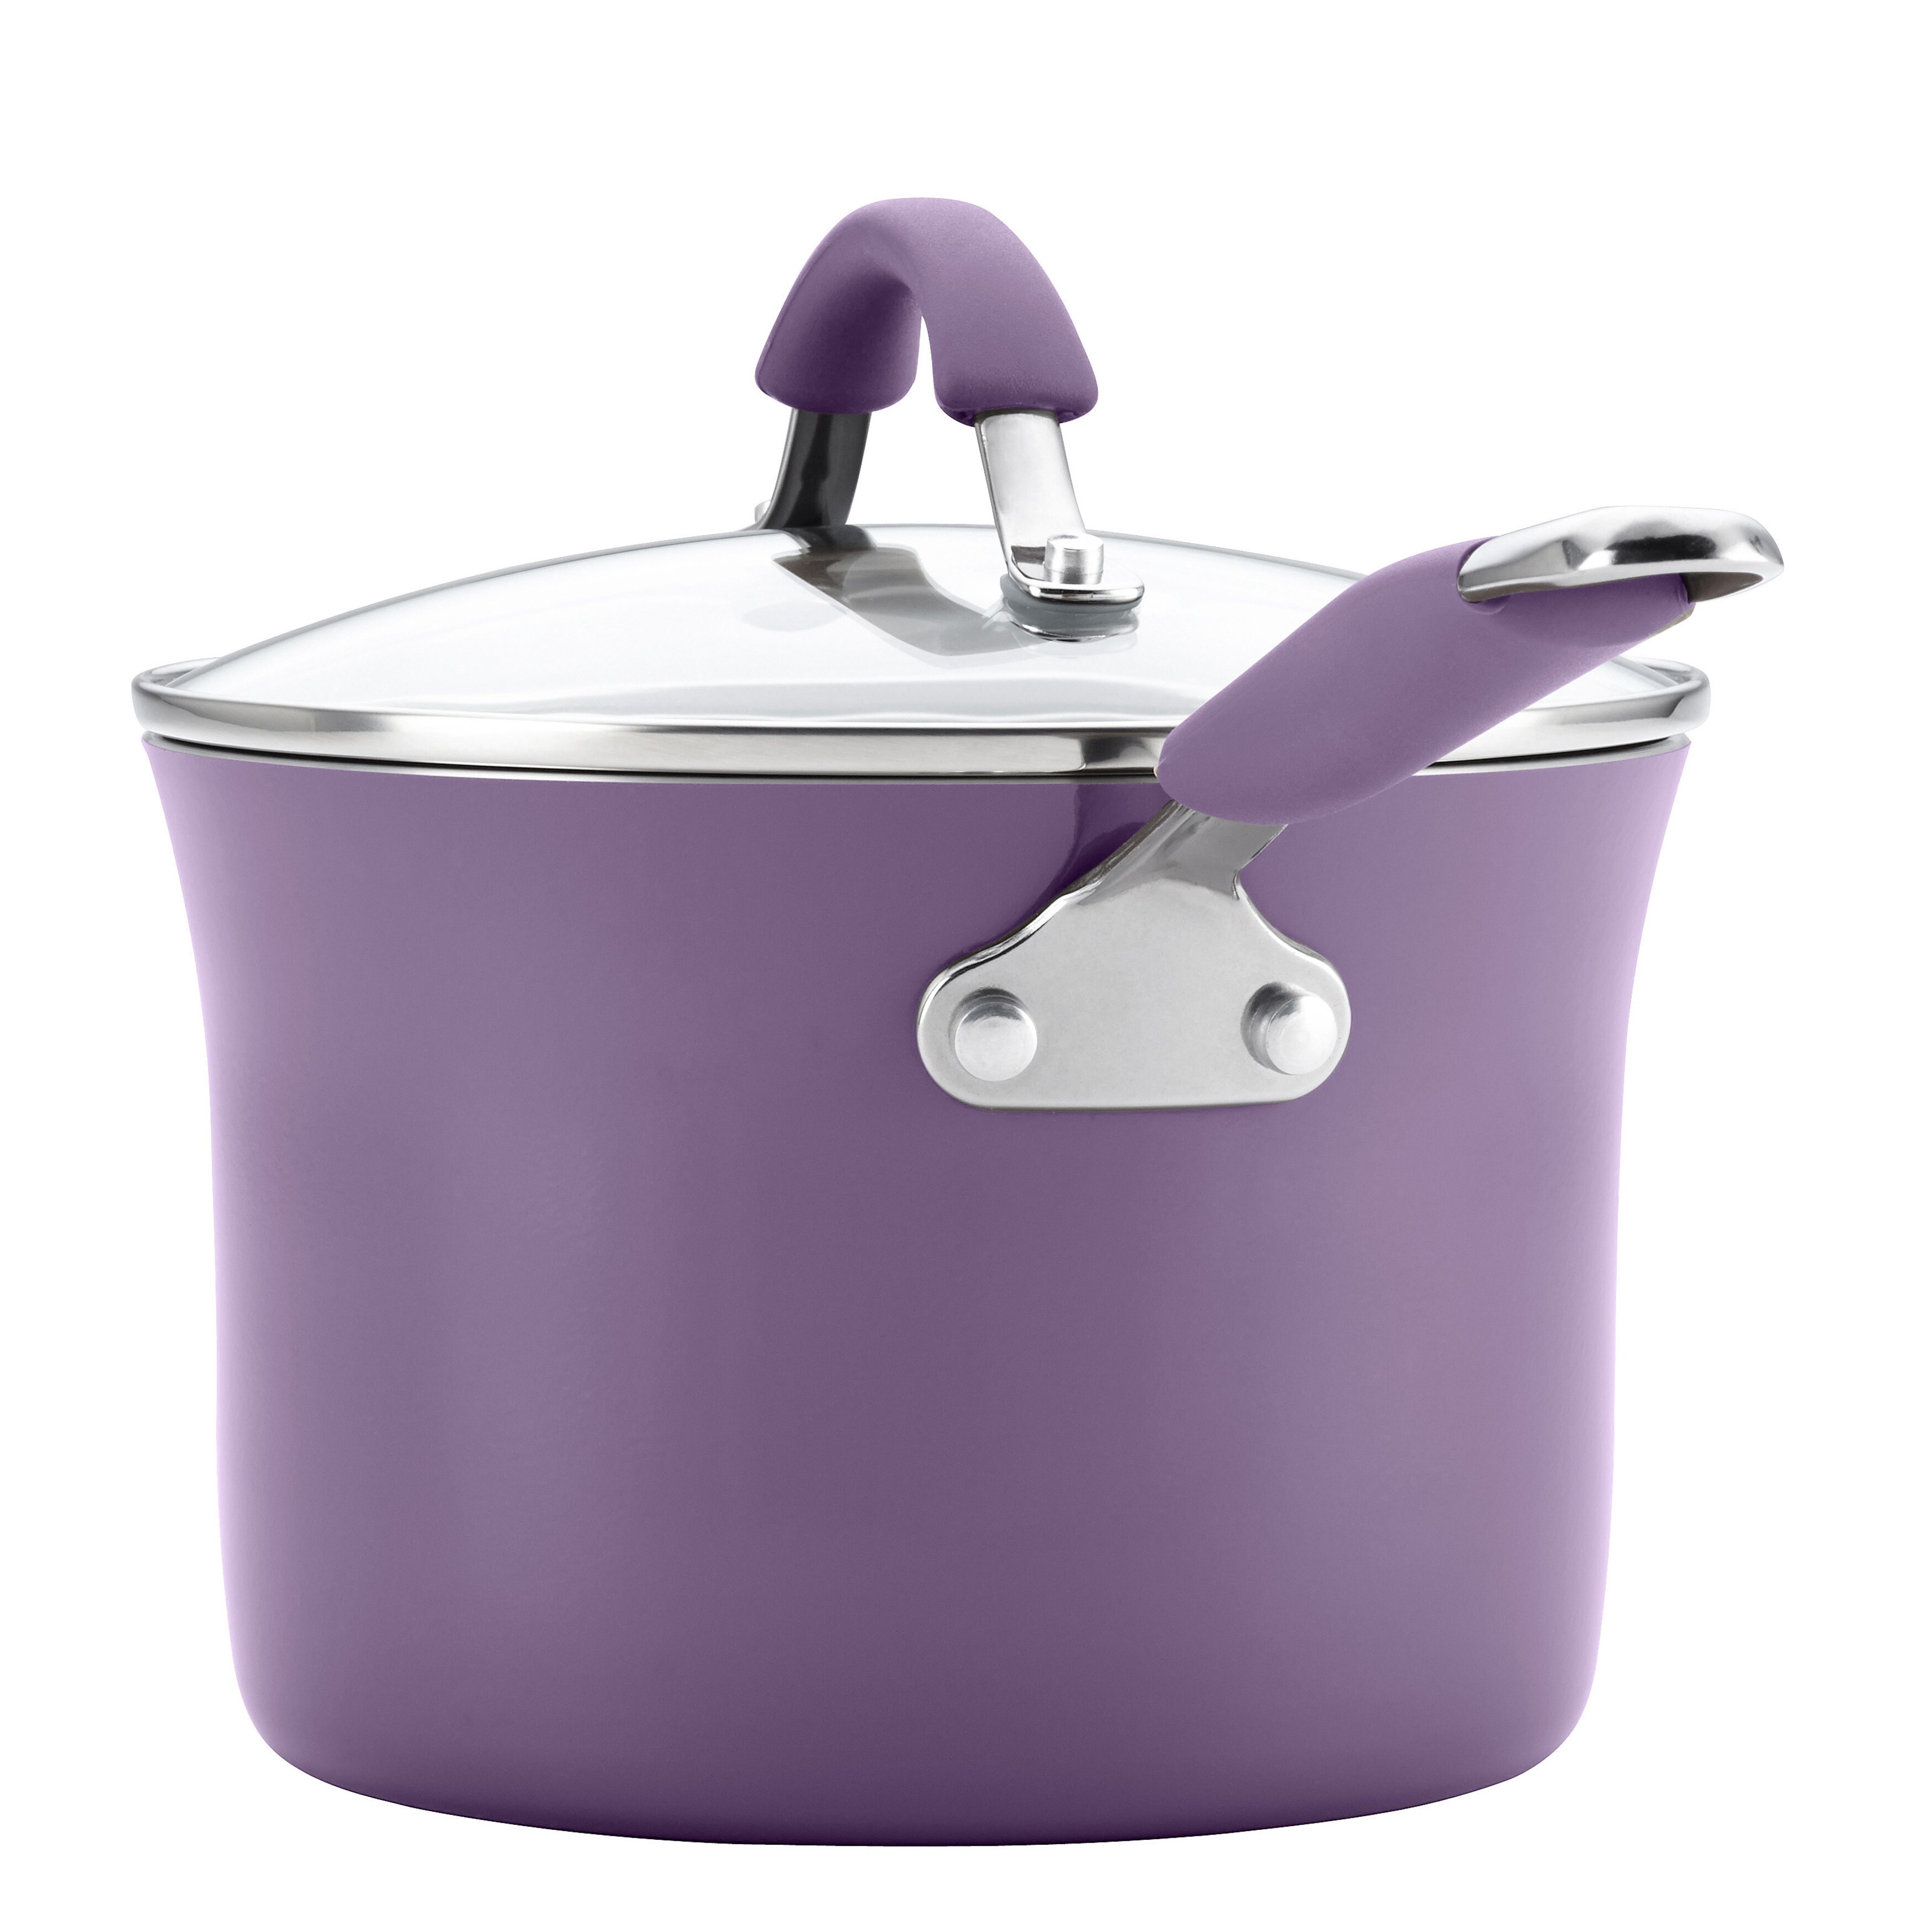 Rachael Ray Cucina Hard Enamel Nonstick 12-Piece Cookware Set, Lavender  Purple (As Is Item) - Bed Bath & Beyond - 14056634